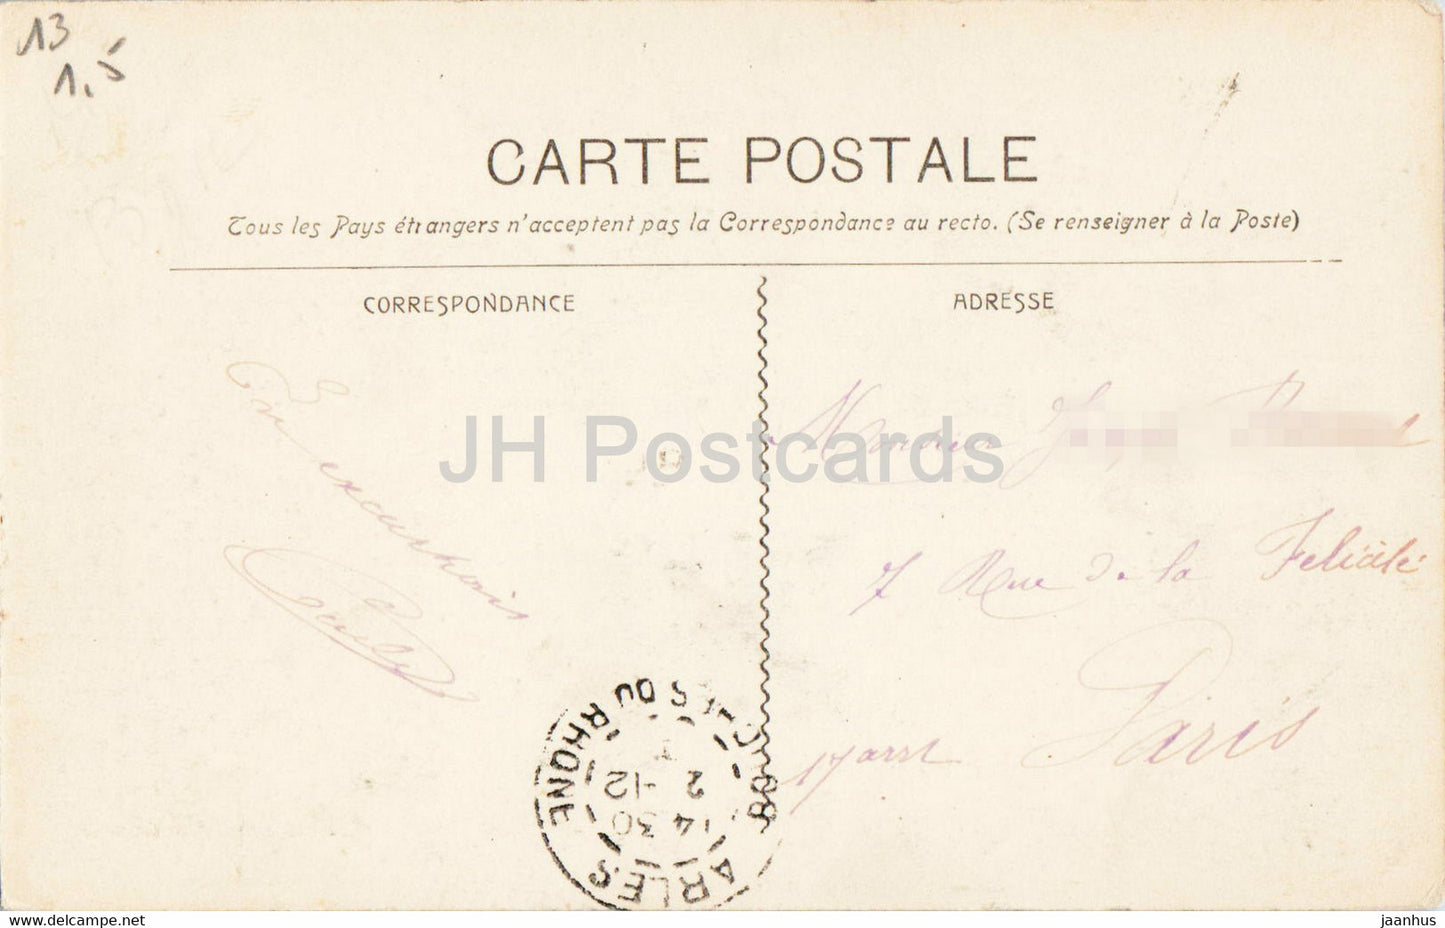 Arles - Interieur des Arenes - 703 - old postcard - France - used